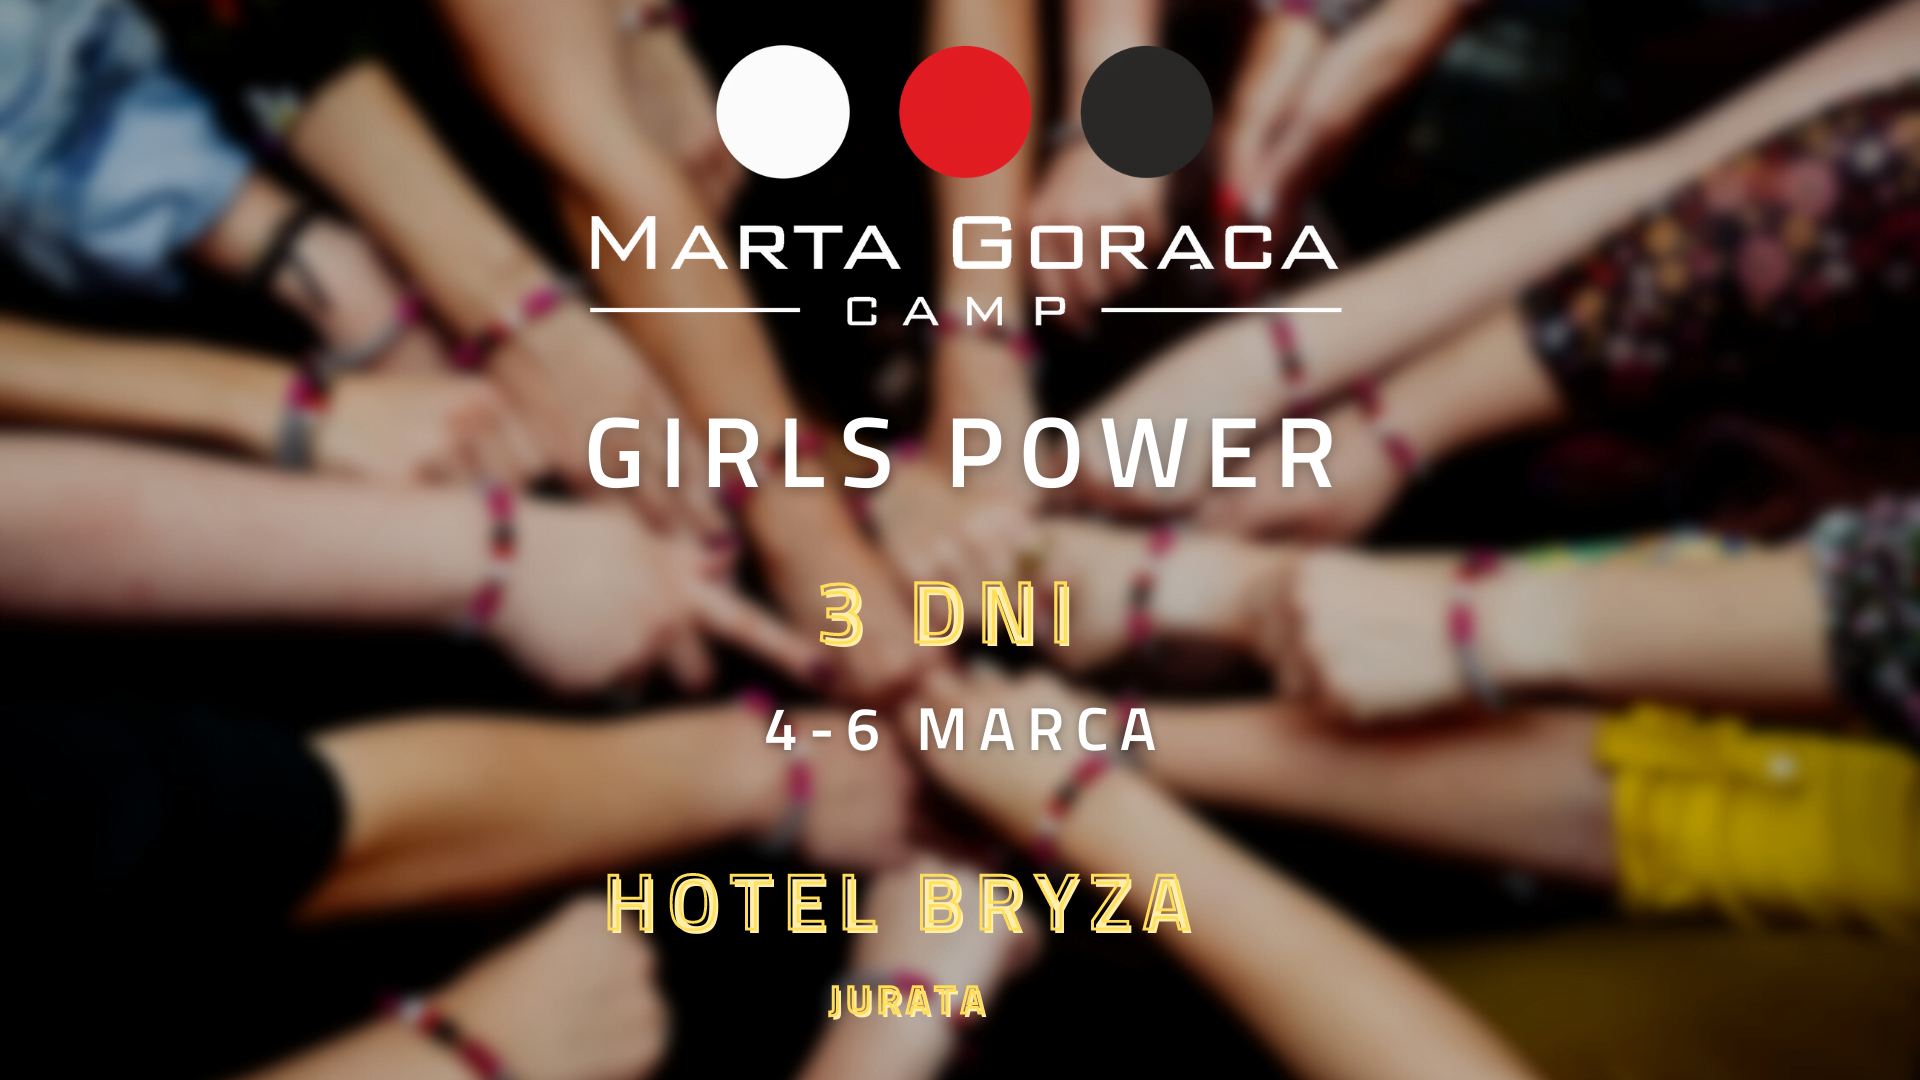 CAMP “GIRLS POWER” 3 DNI